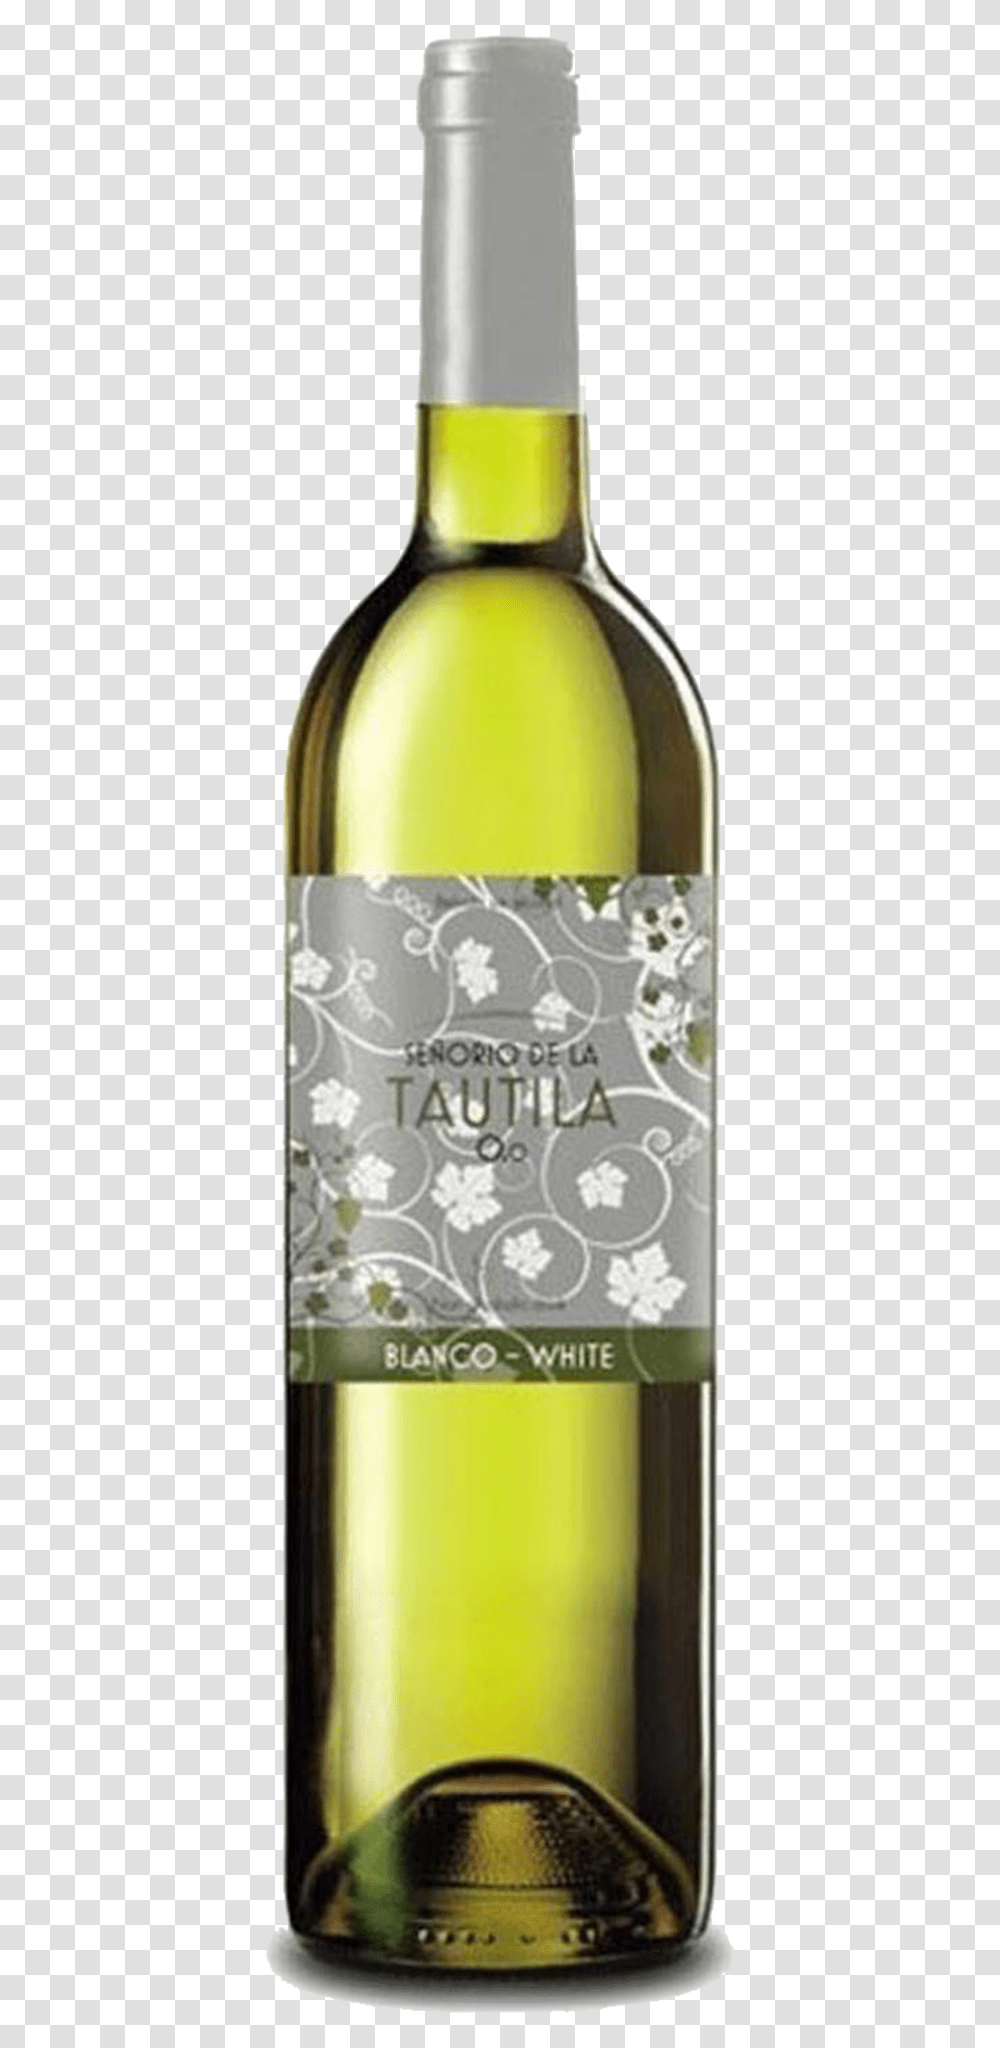 Senorio De La Tautila Blanco Non Alcoholic White Wine, Beverage, Drink, Bottle, Label Transparent Png